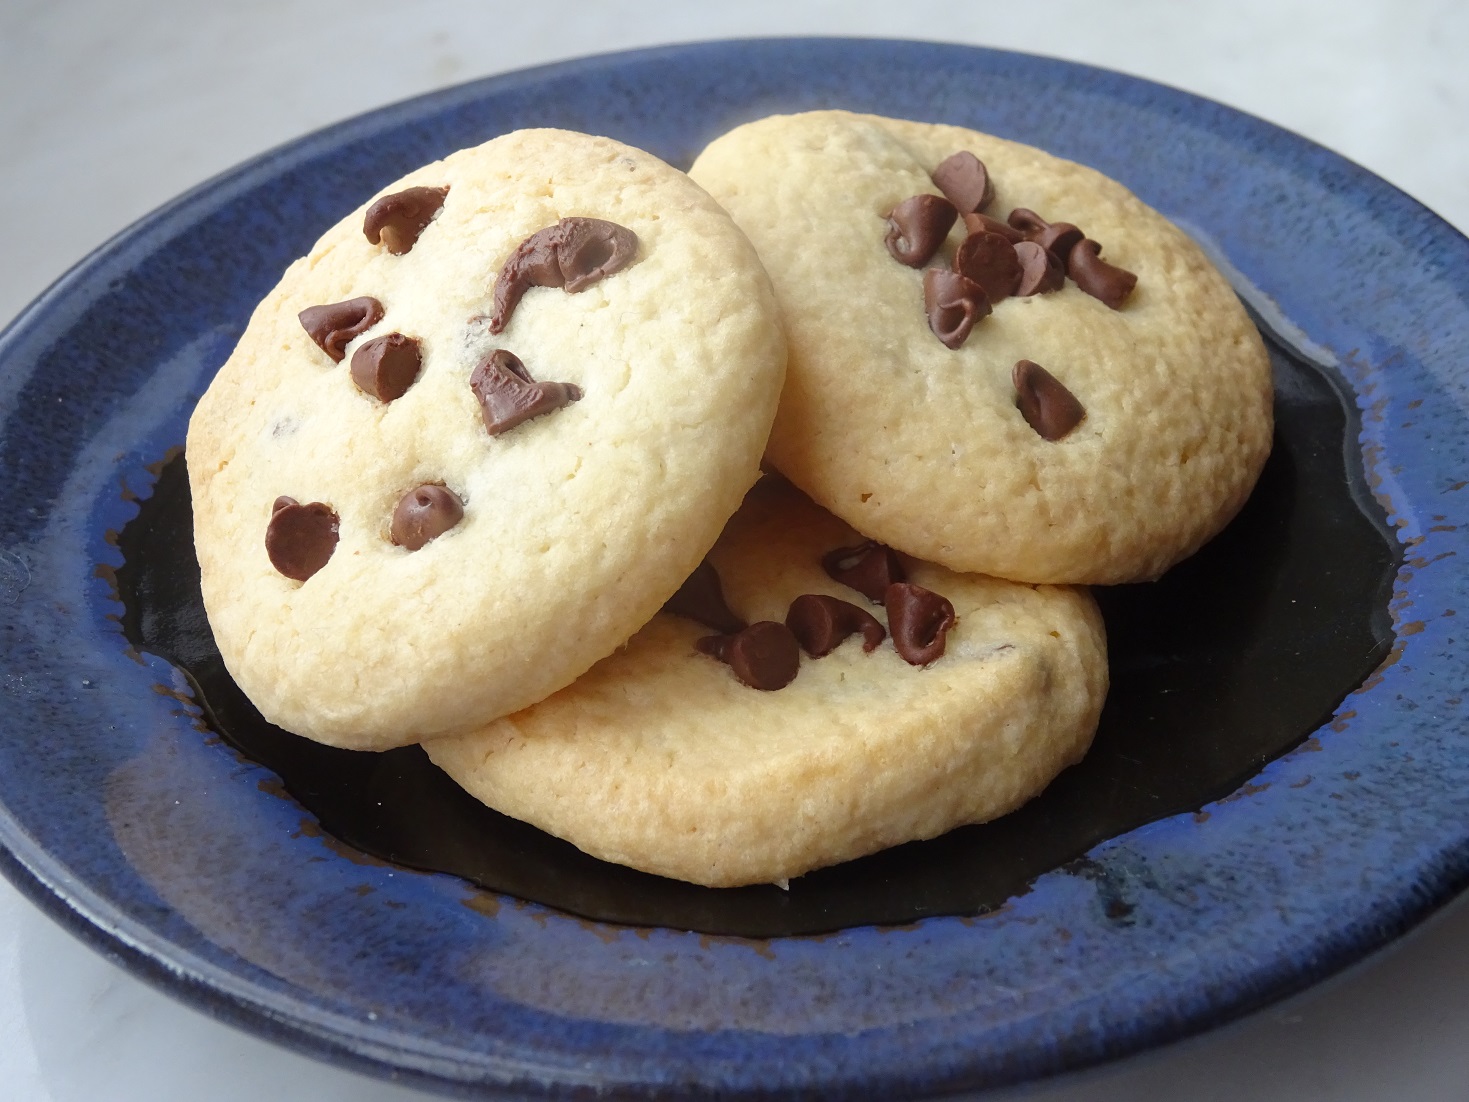 alt="Cookies-senza-glutine-e-lattosio"